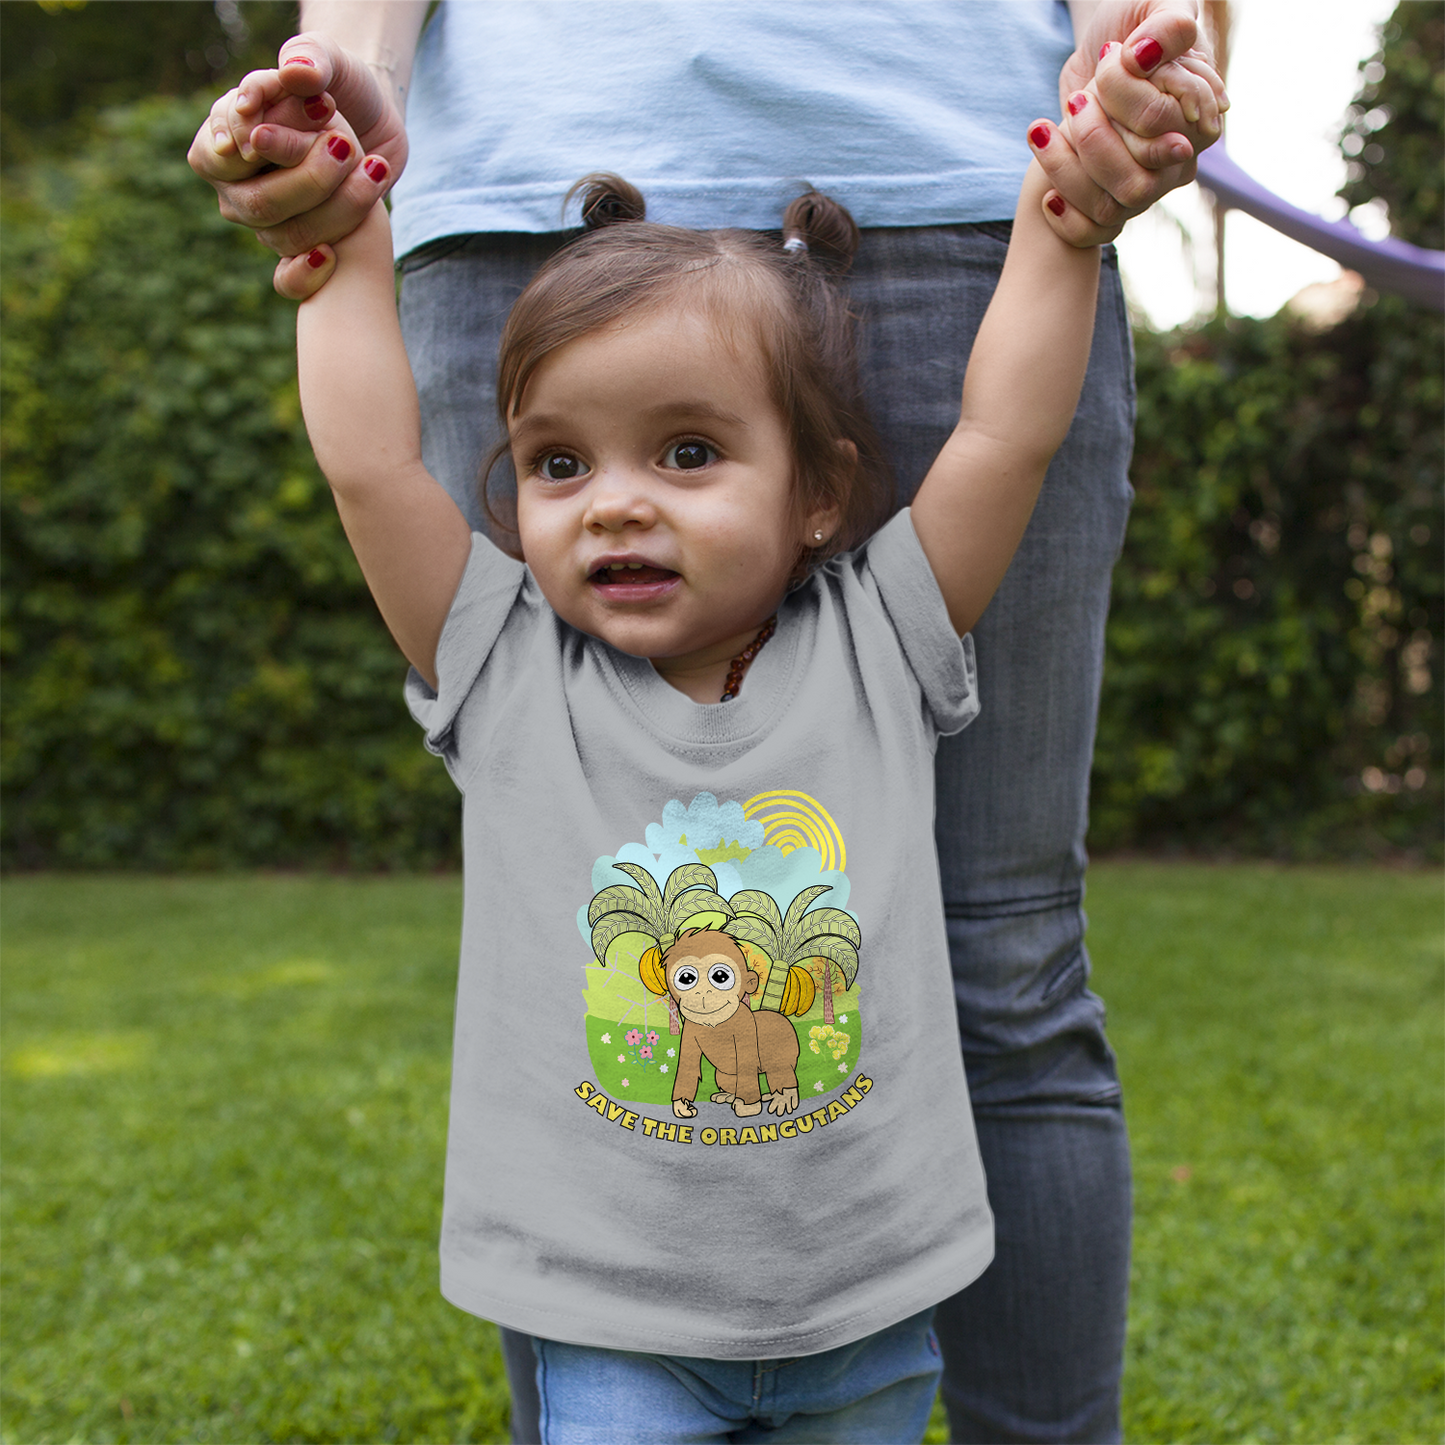 Endanzoo Organic Short Sleeve Kids Tee Shirt - Save The Orangutans